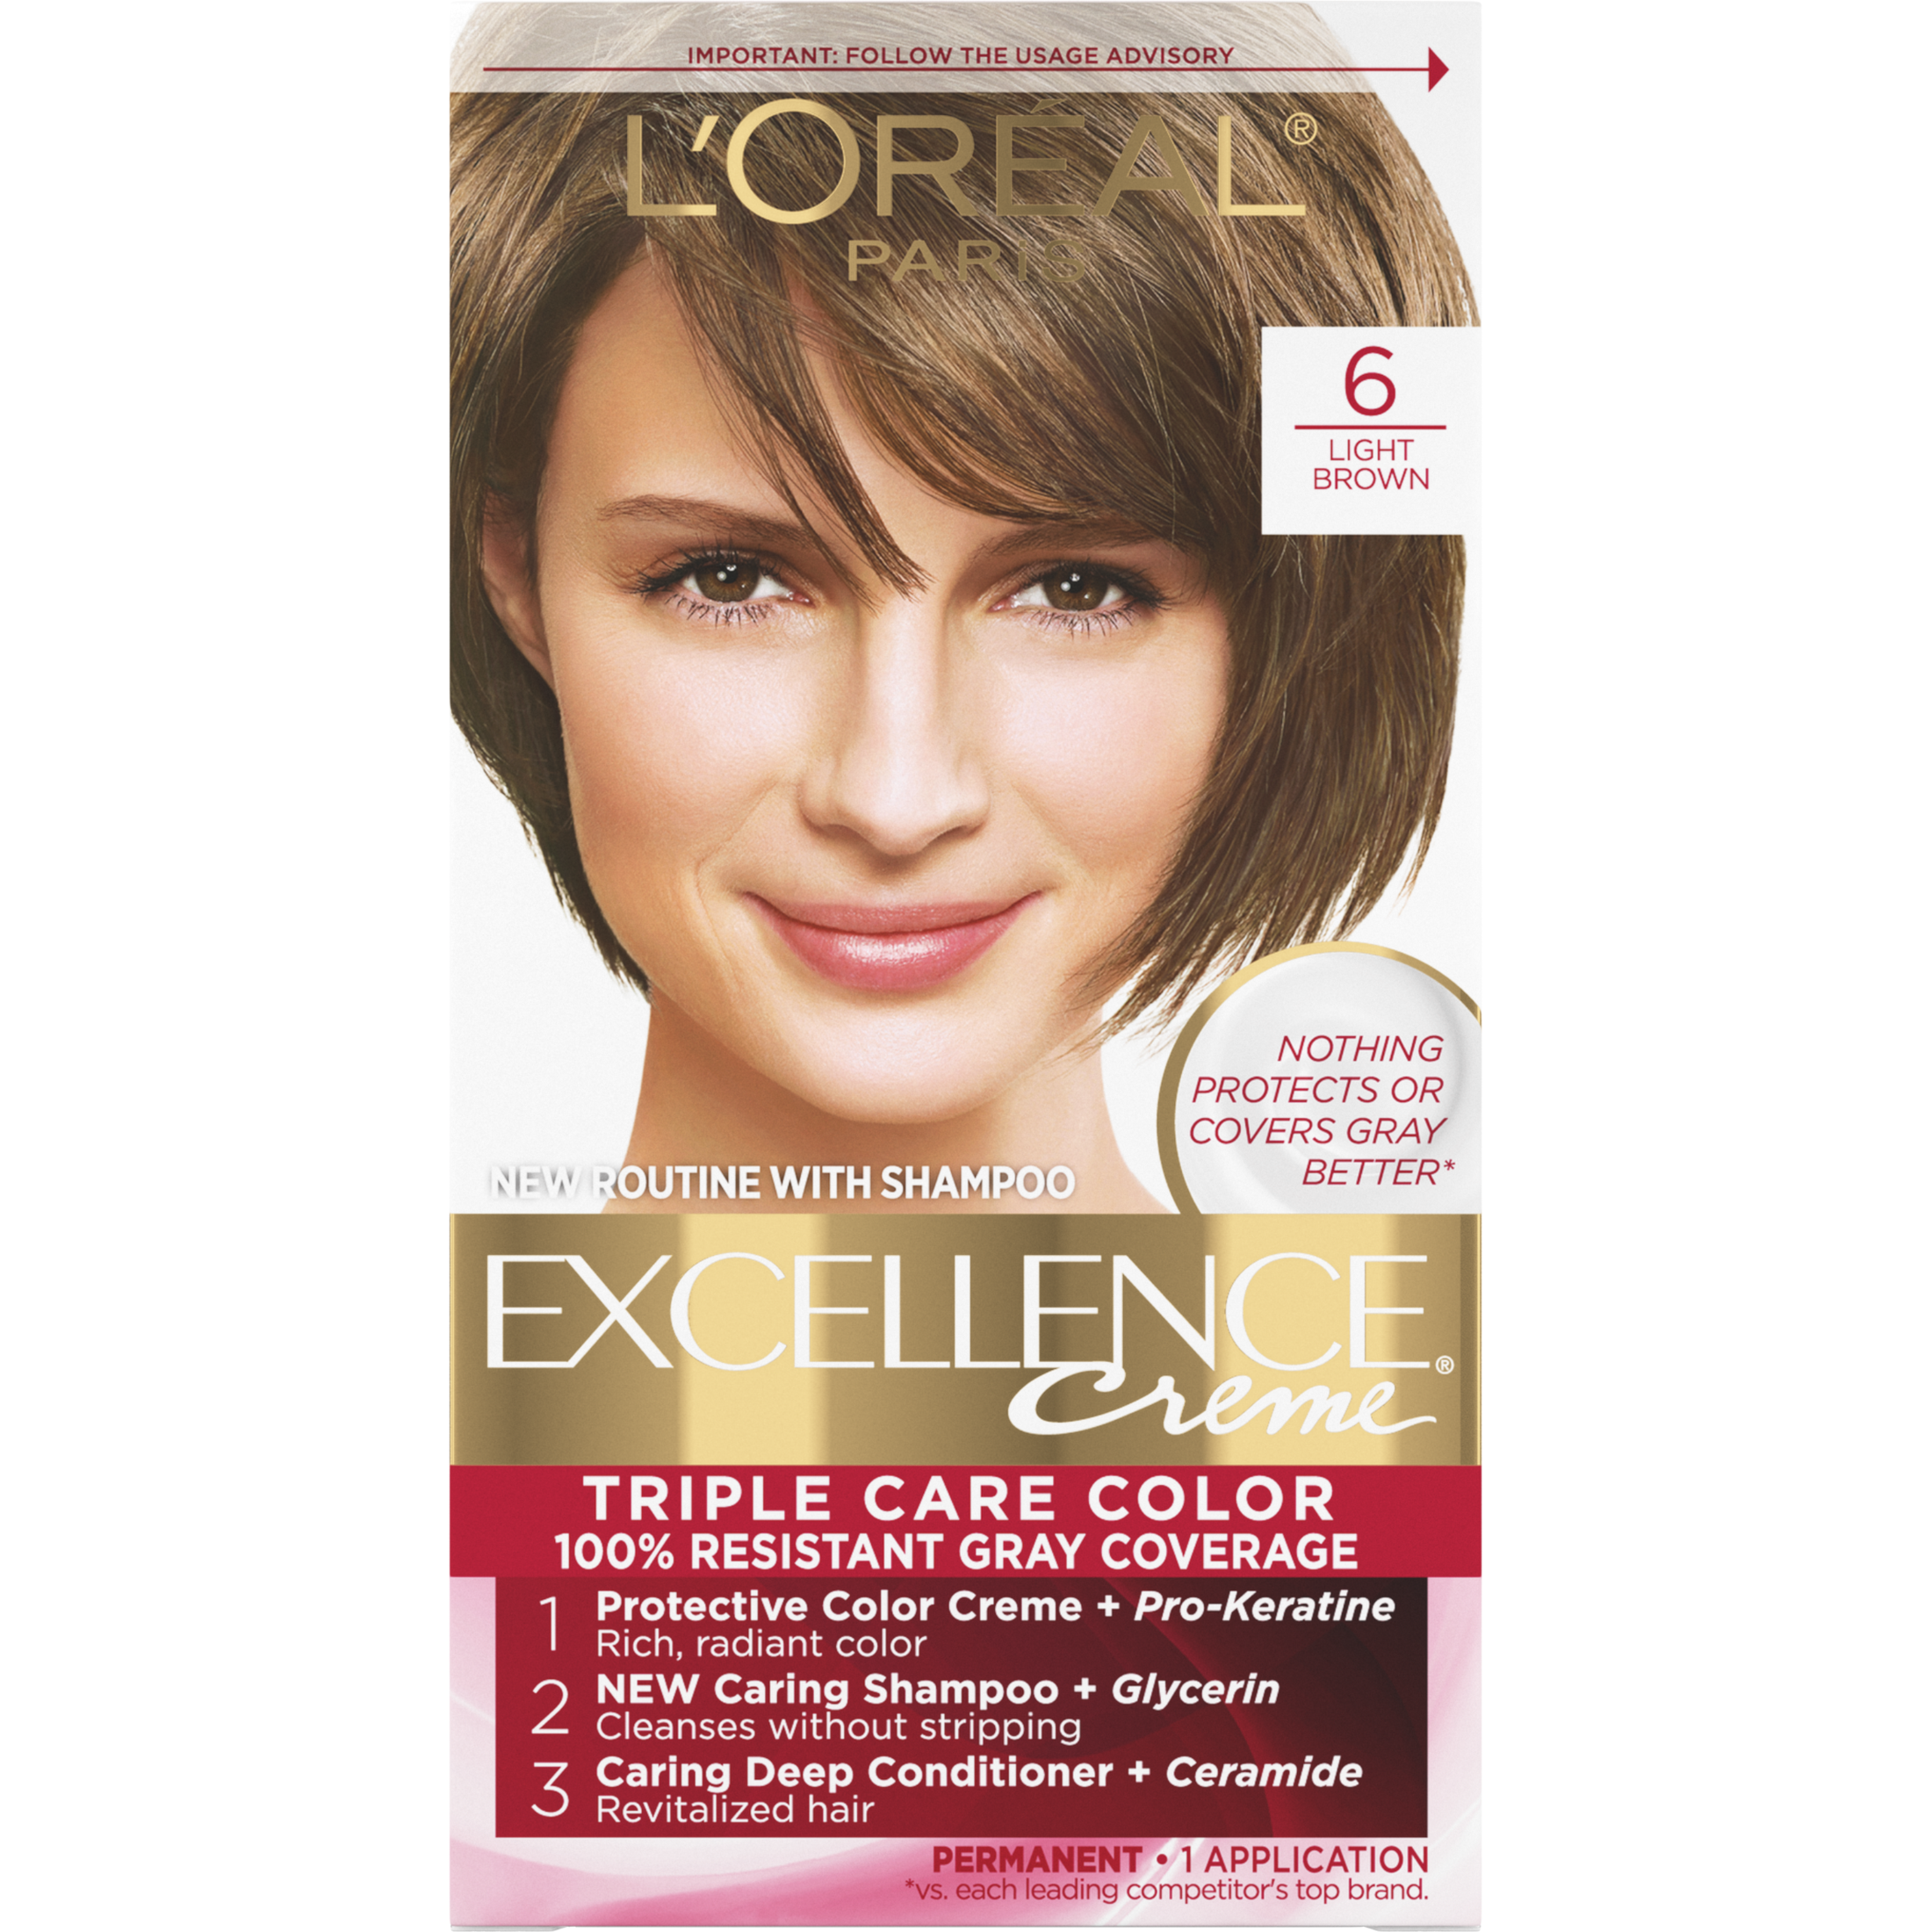 L'Oreal Paris Excellence Creme Permanent Hair Color, 6 Light Brown - image 1 of 8